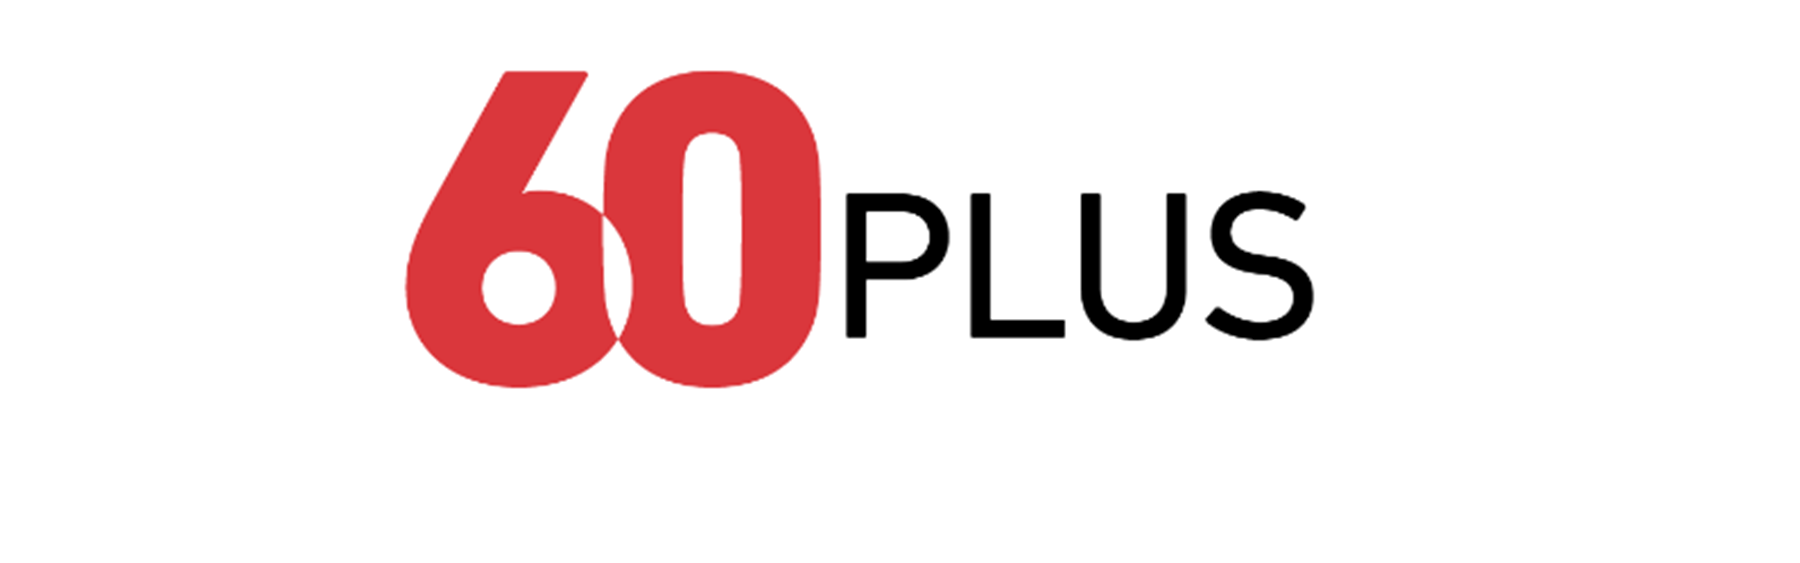 60 plus logo